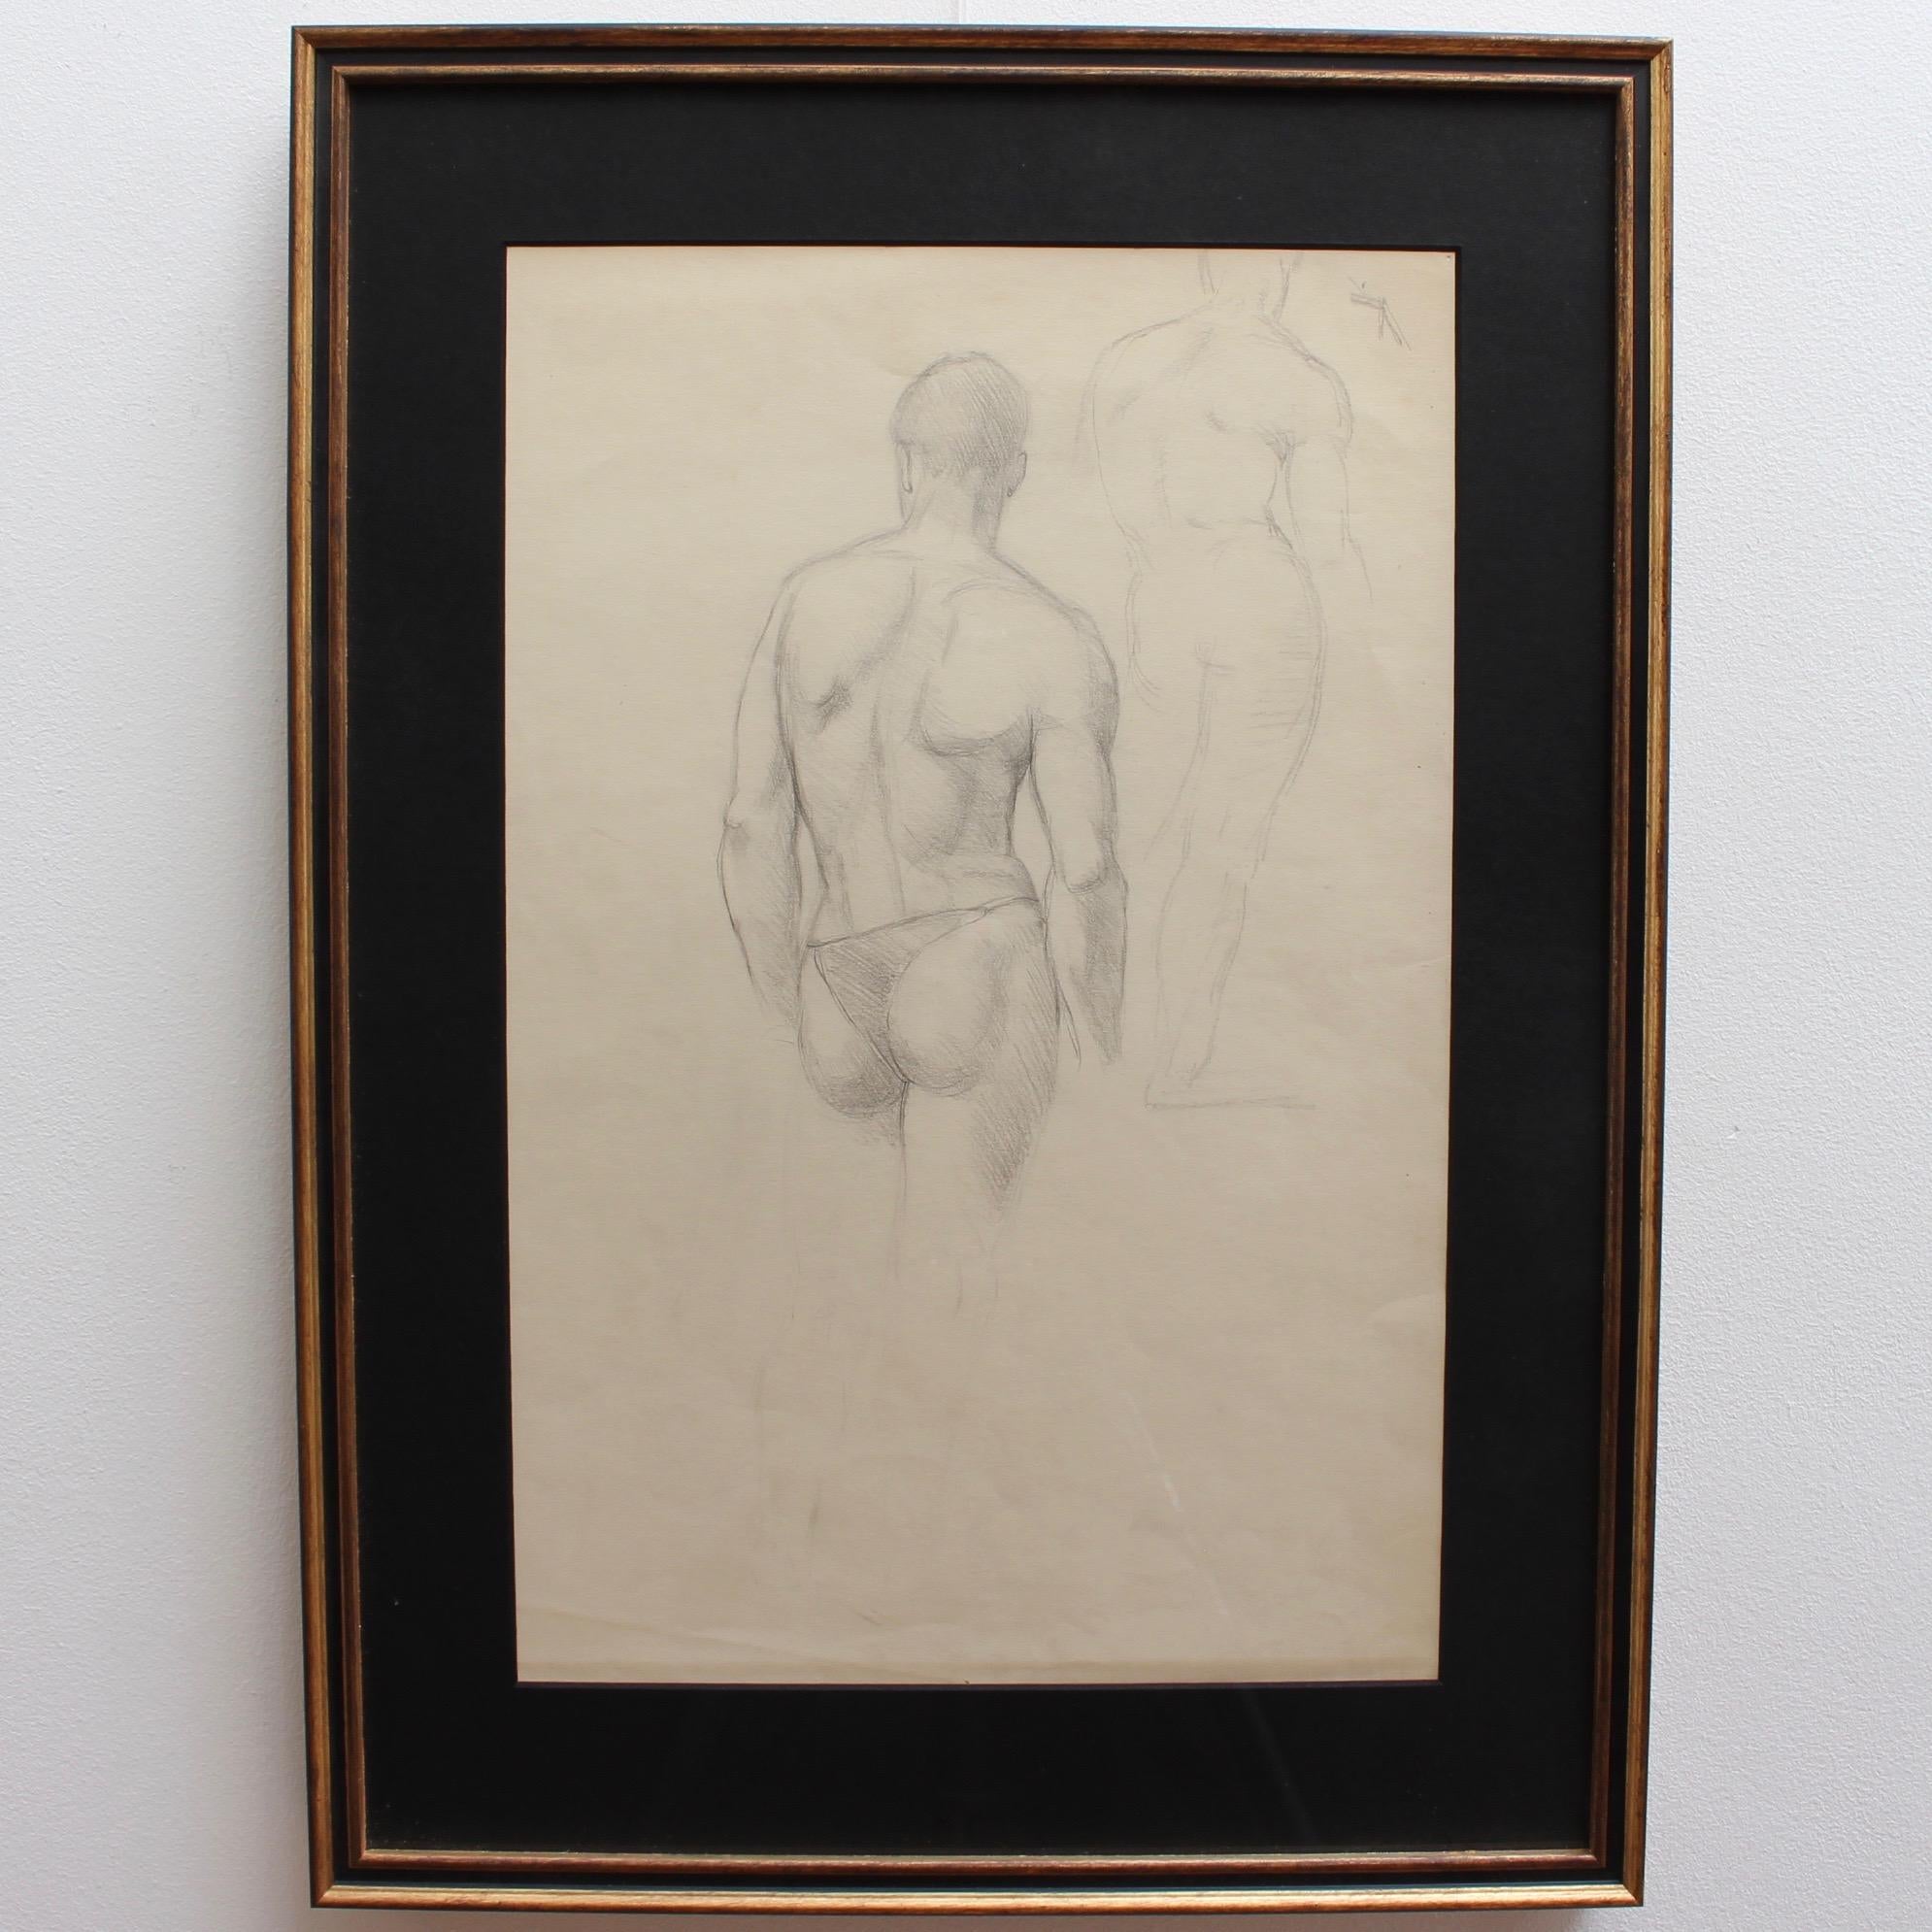 Nude Bernard Sleigh, RBSA  - Nu masculin Dessin au crayon de Bernard Sleigh RBSA (vers 1900-1920)